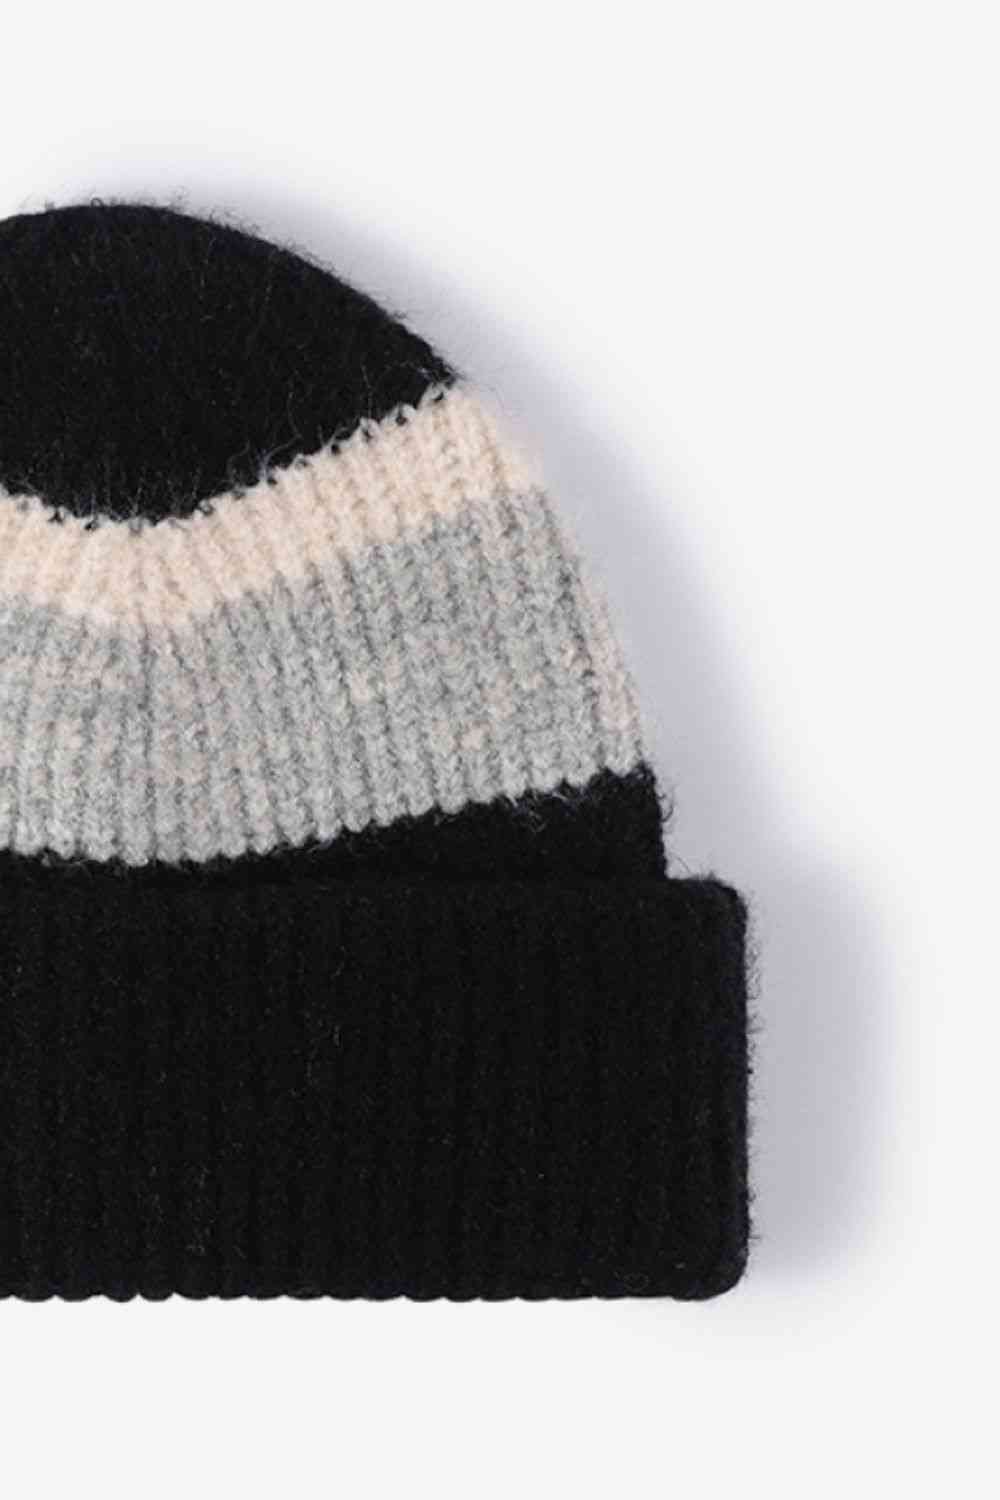 Tricolor Cuffed Knit Beanie - FleekGoddess